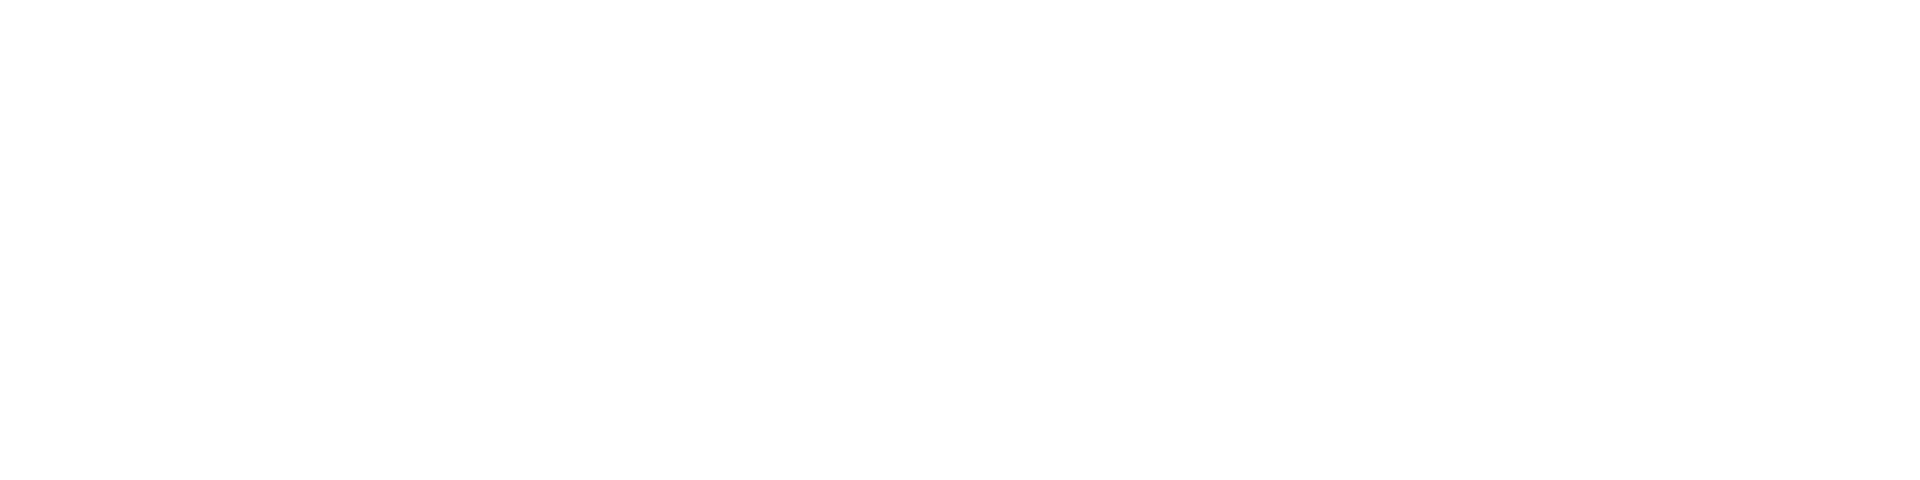 DORNBOLLHOEFER Logo white transparent